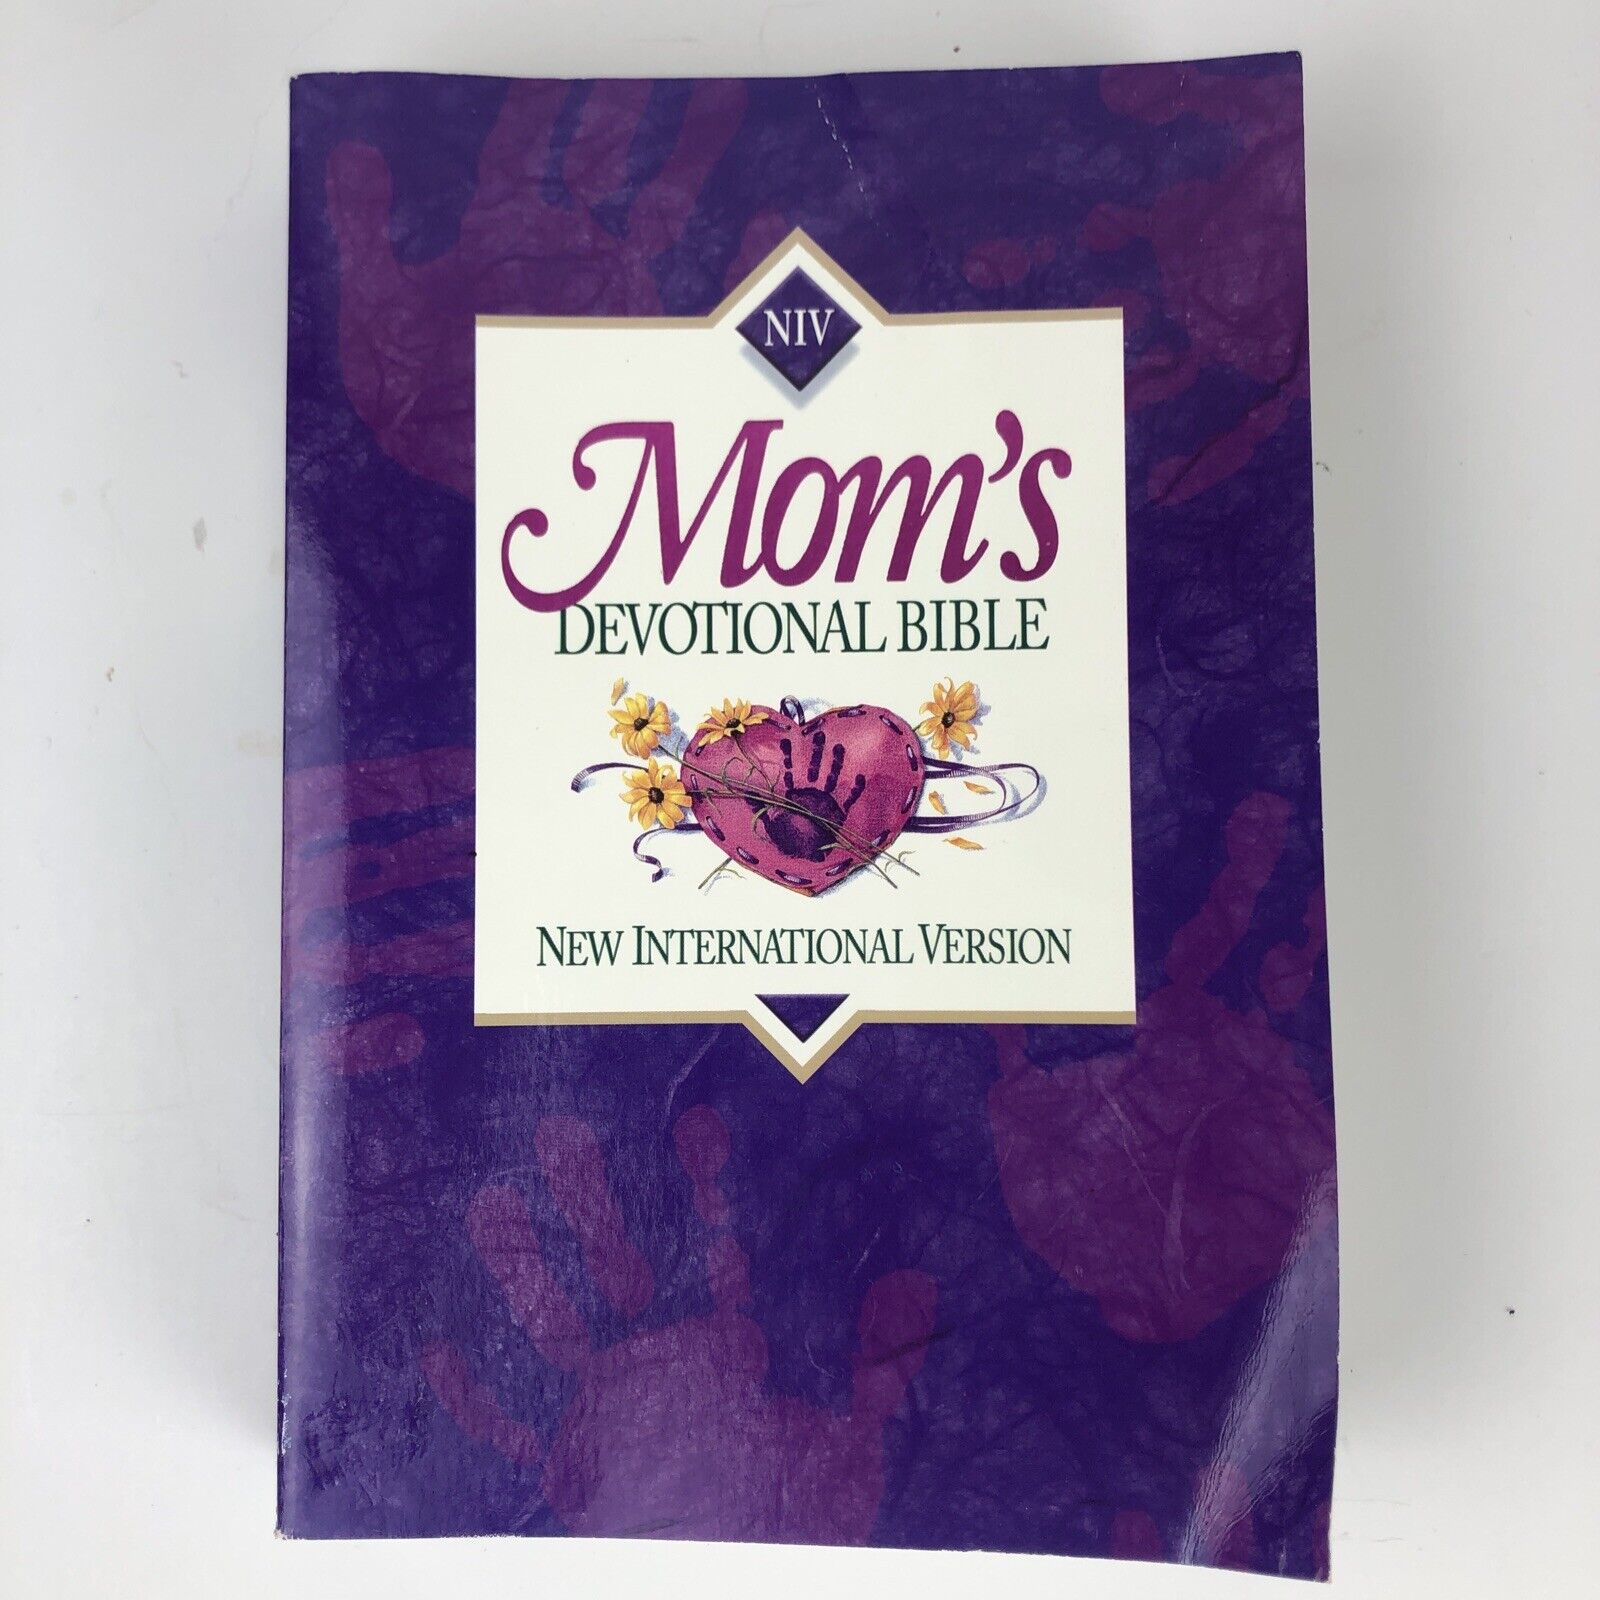 NIV Mom's Devotional Bible Zondervan Publishing 1996 Purple Cover (B-2)